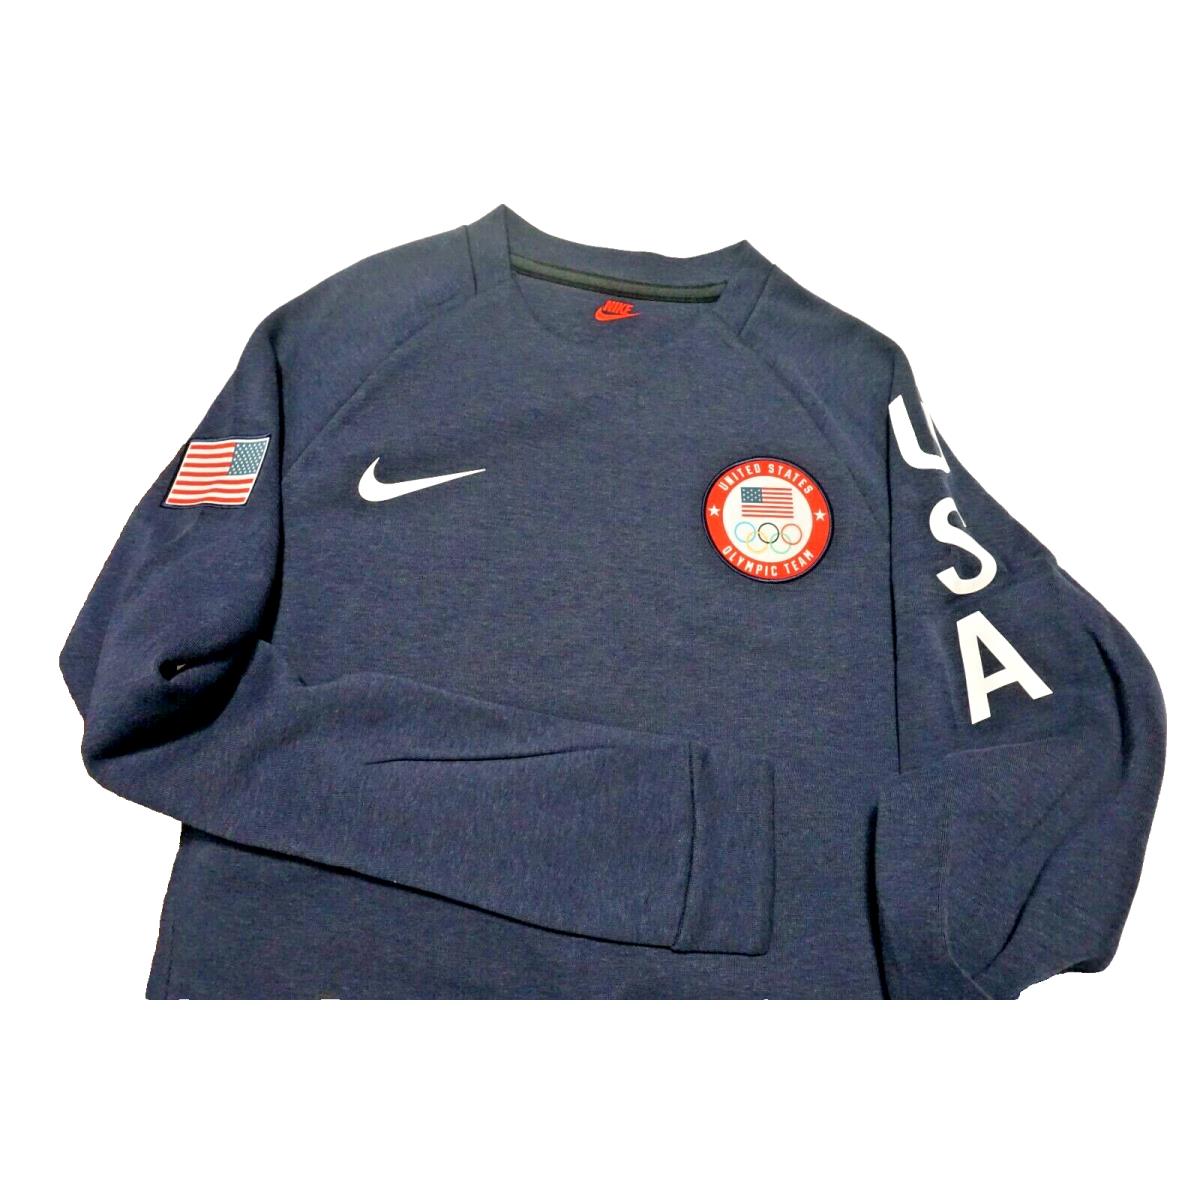 Nike United States Olympics Crewneck Sweatshirt Team Usa Color Navy Size M